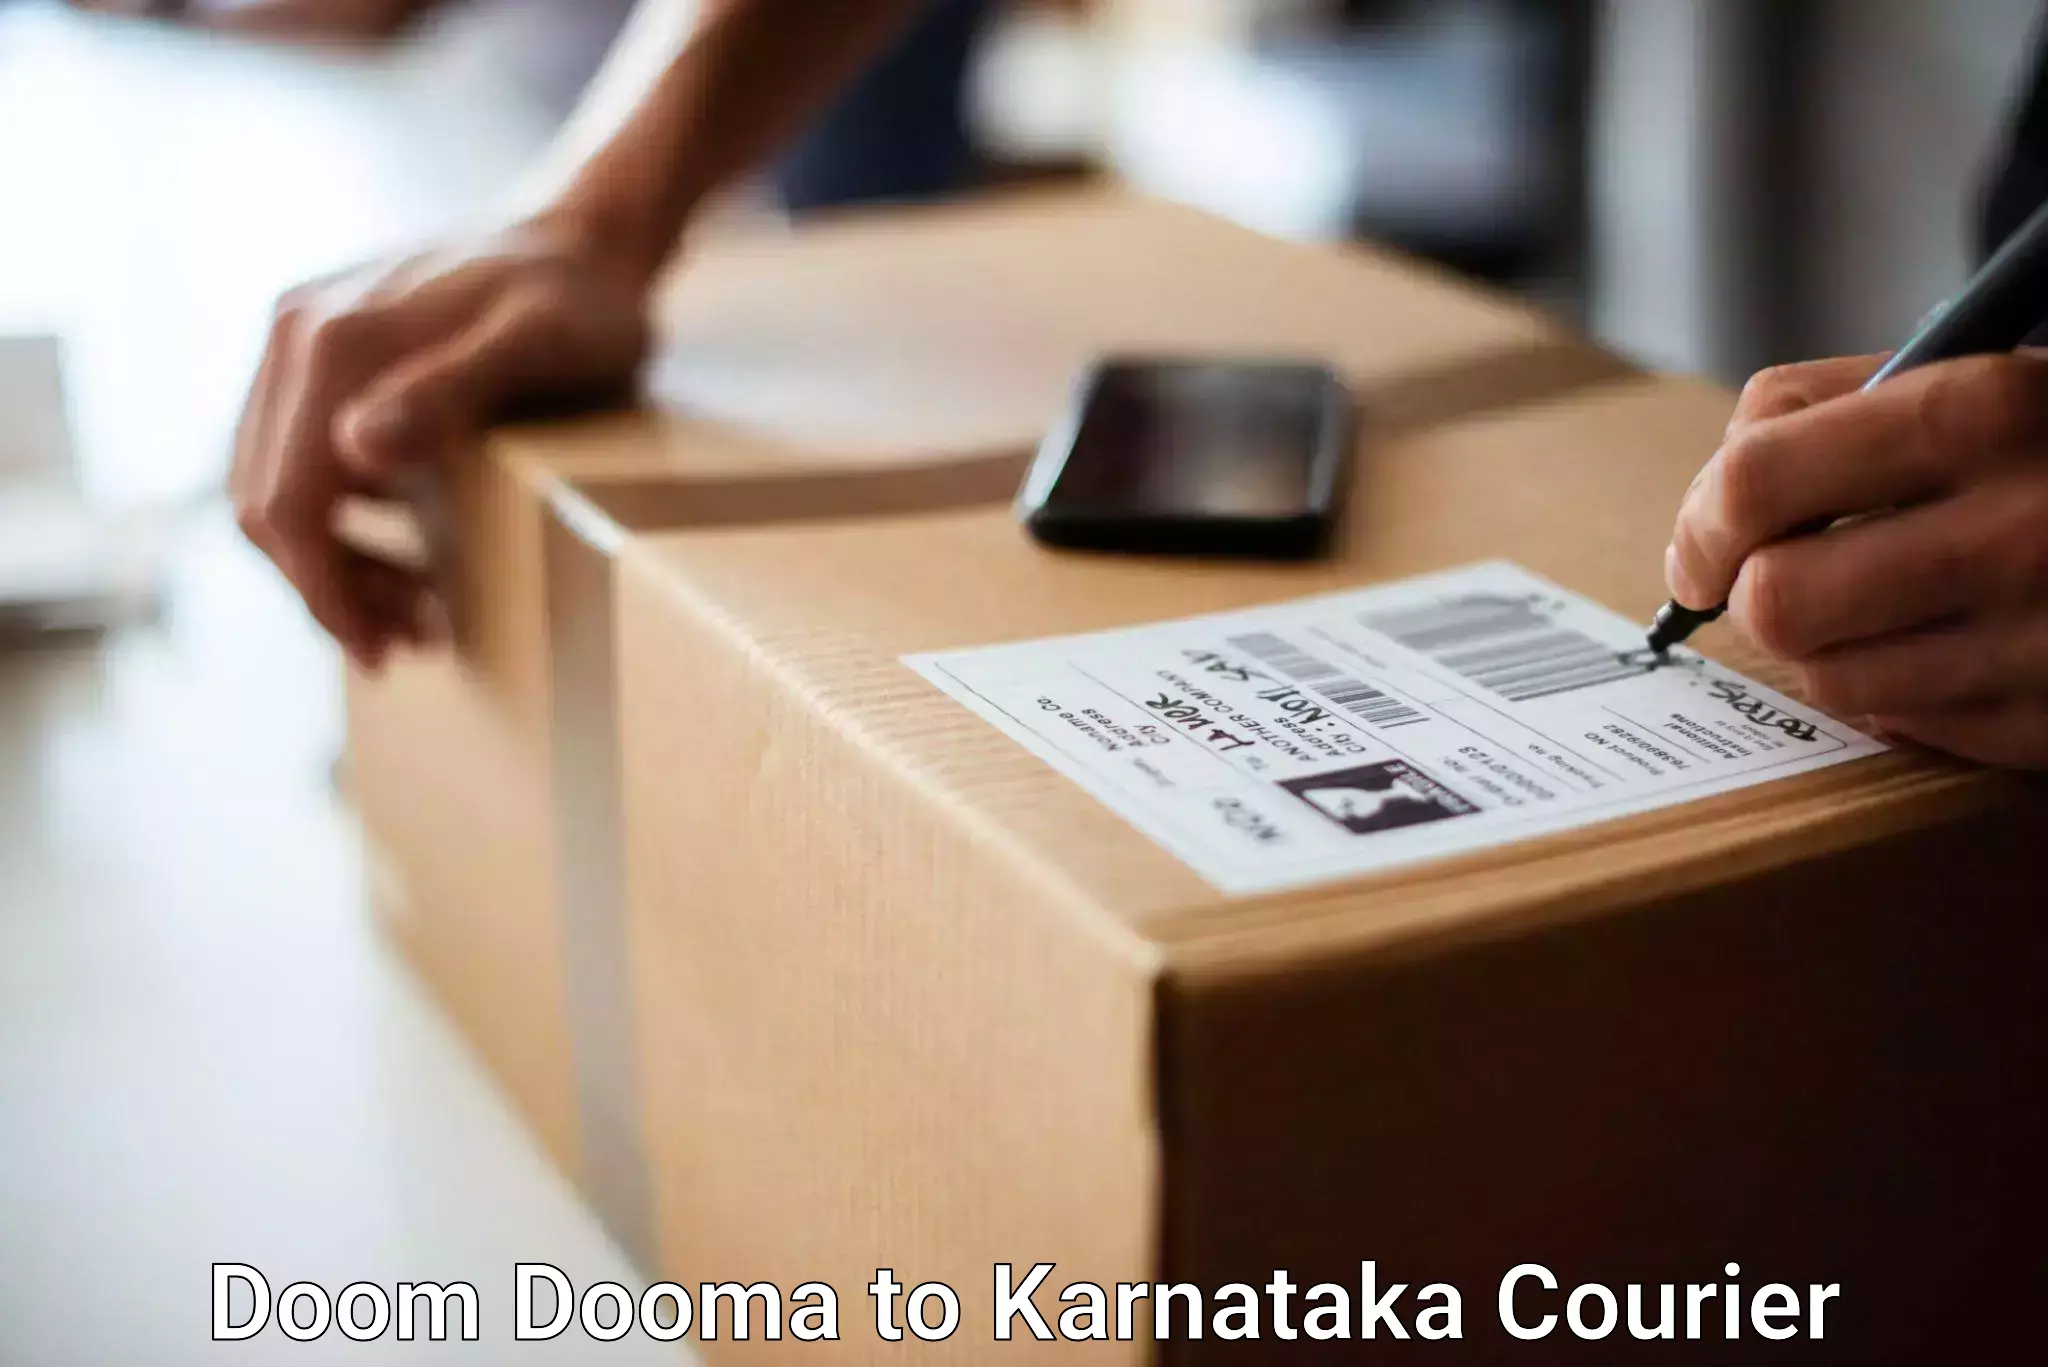 Online luggage shipping booking Doom Dooma to Karnataka